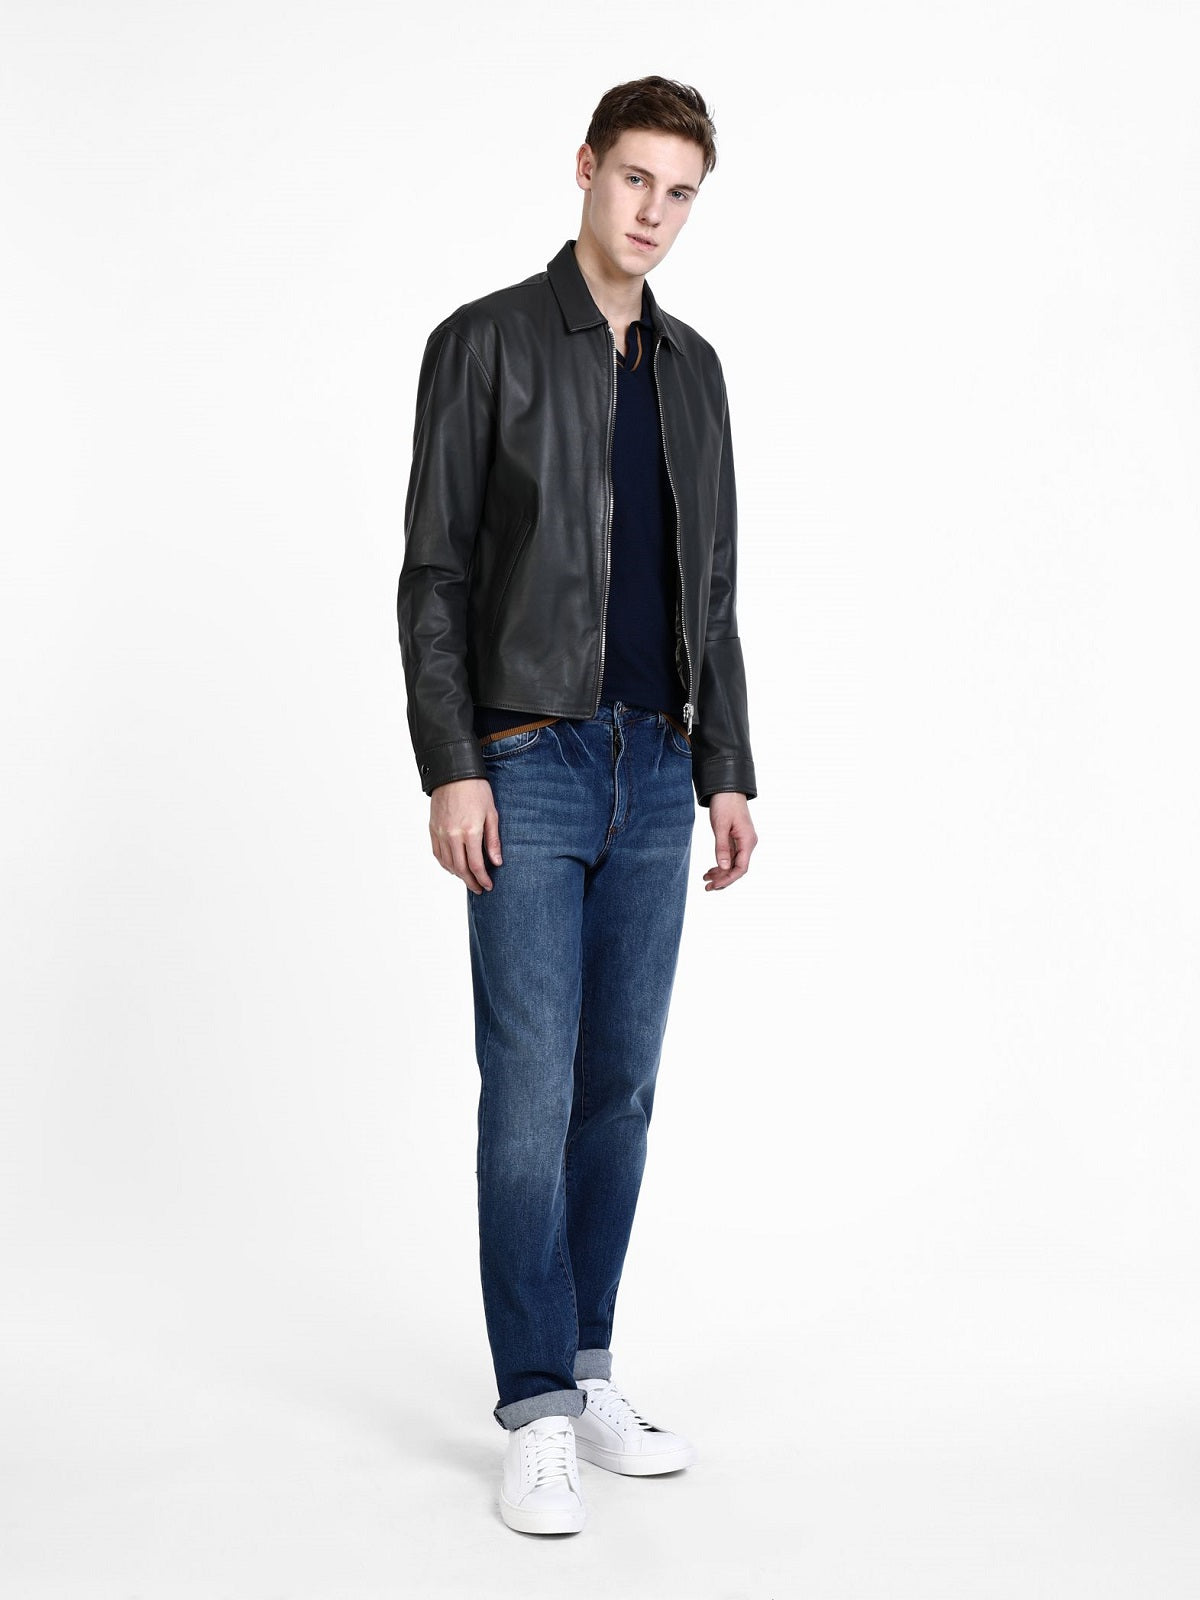 Men Black Shirt Leather Jacket | Black Leather Jacket Mens